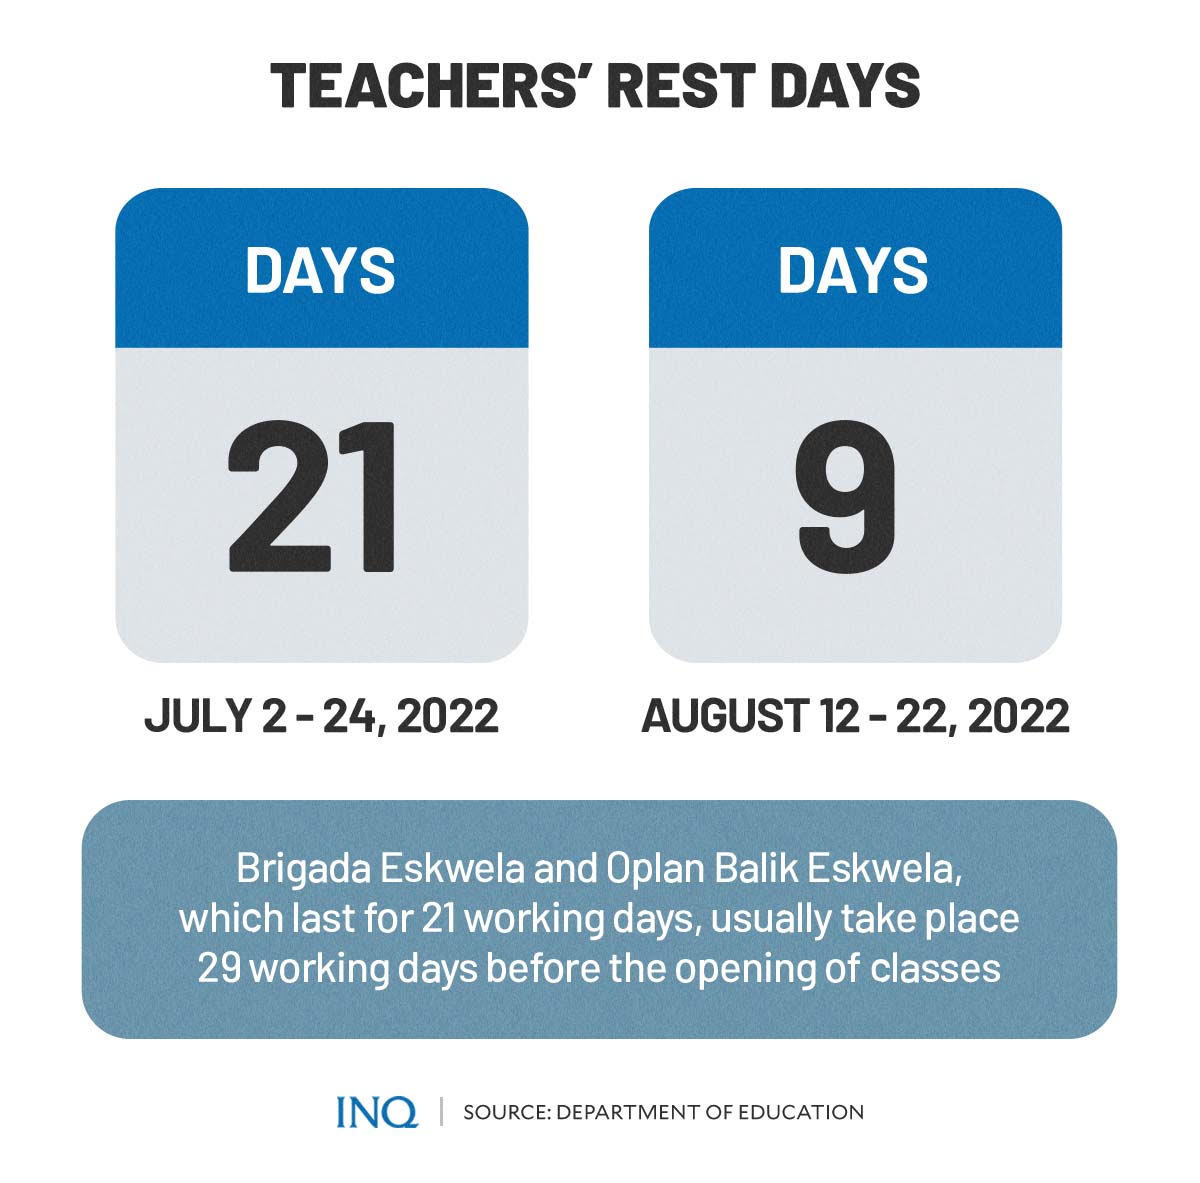 Teachers' rest days